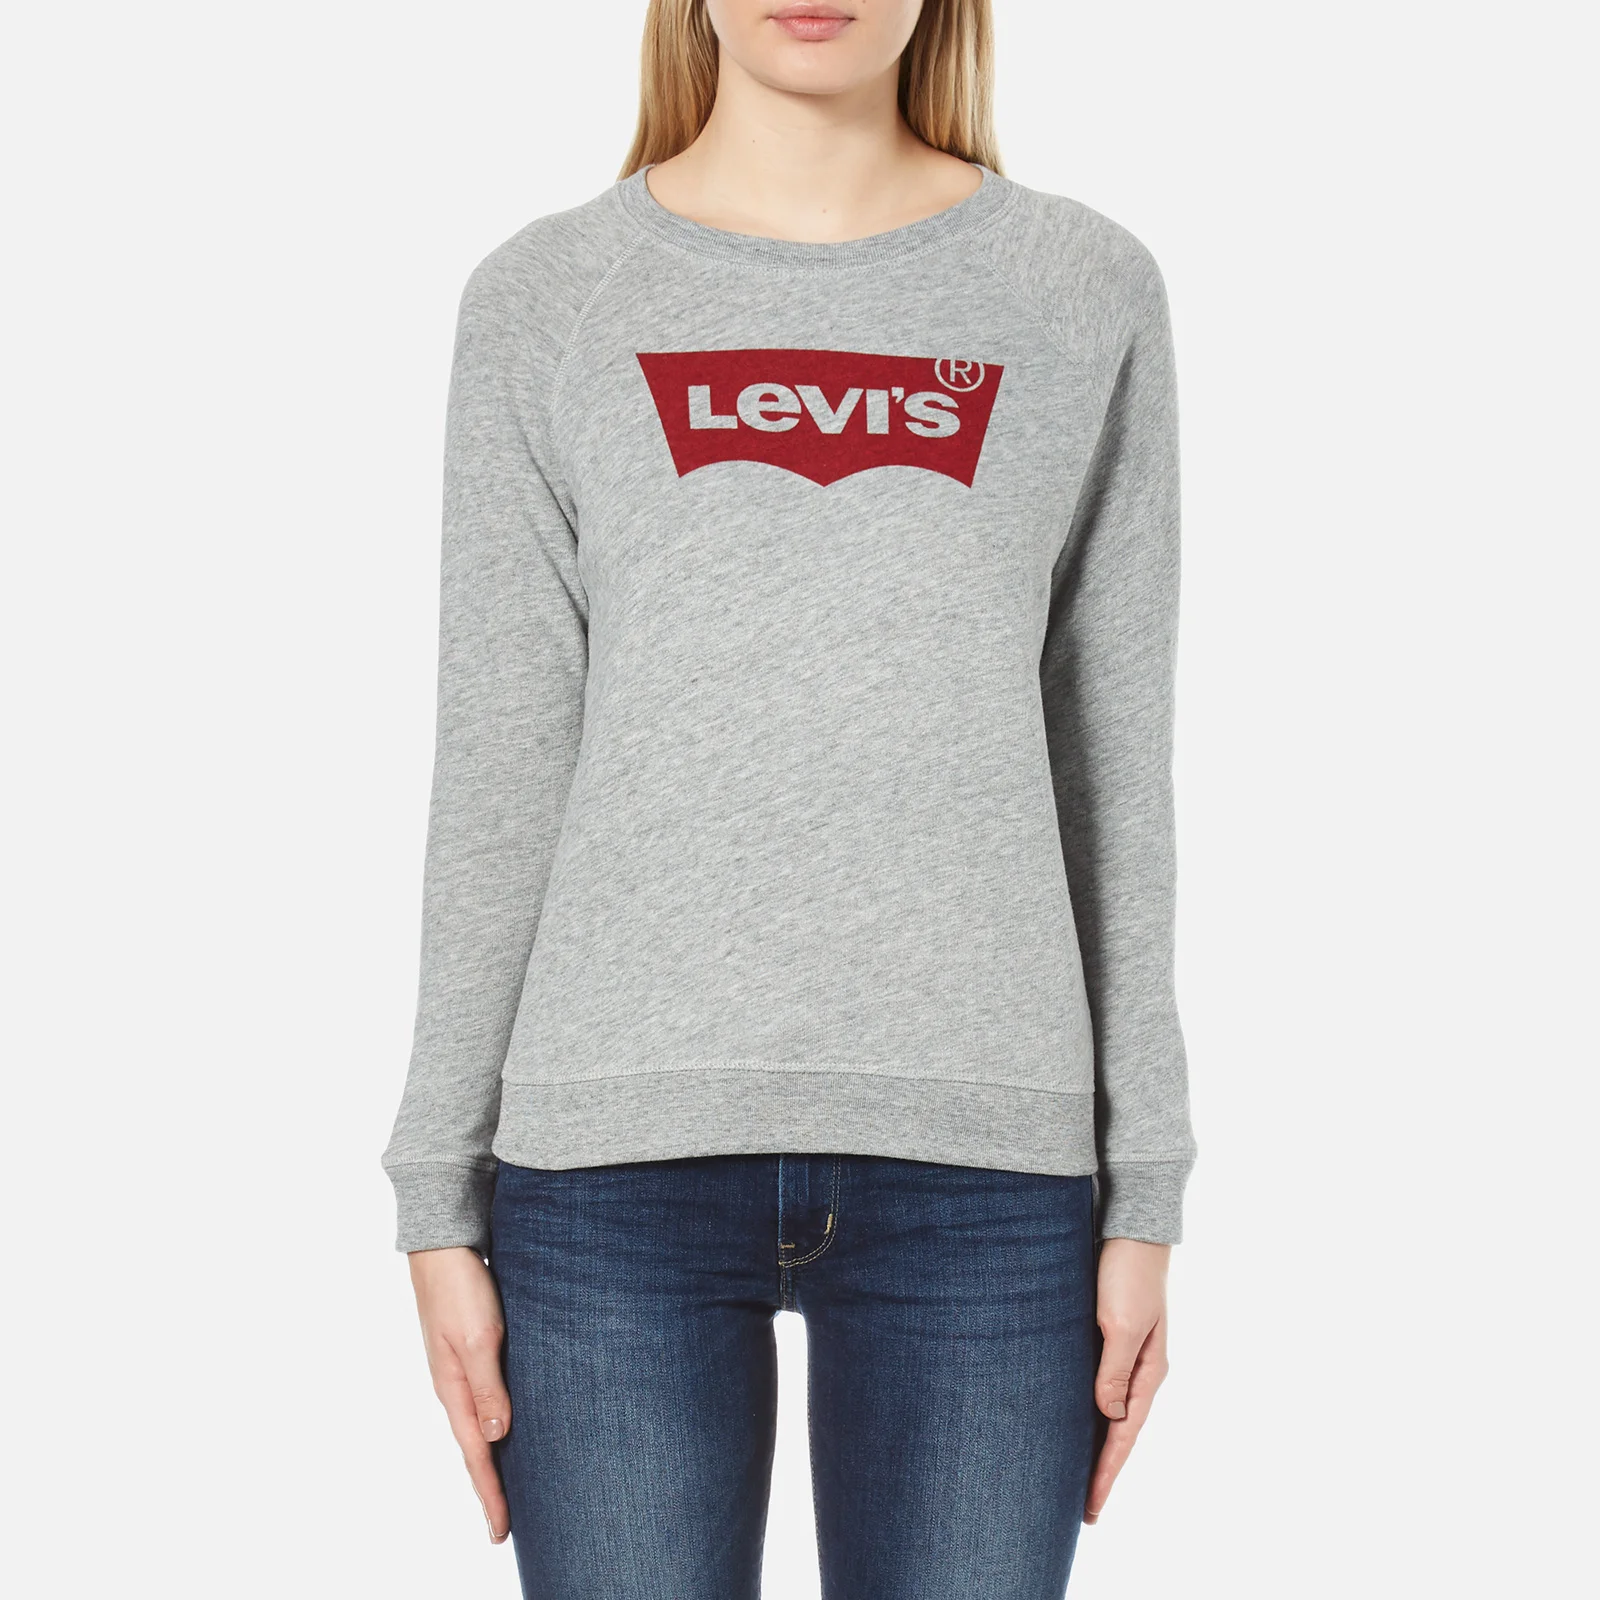 Levi's Women's Classic Crew Sweatshirt - Smokestack Heather Image 1